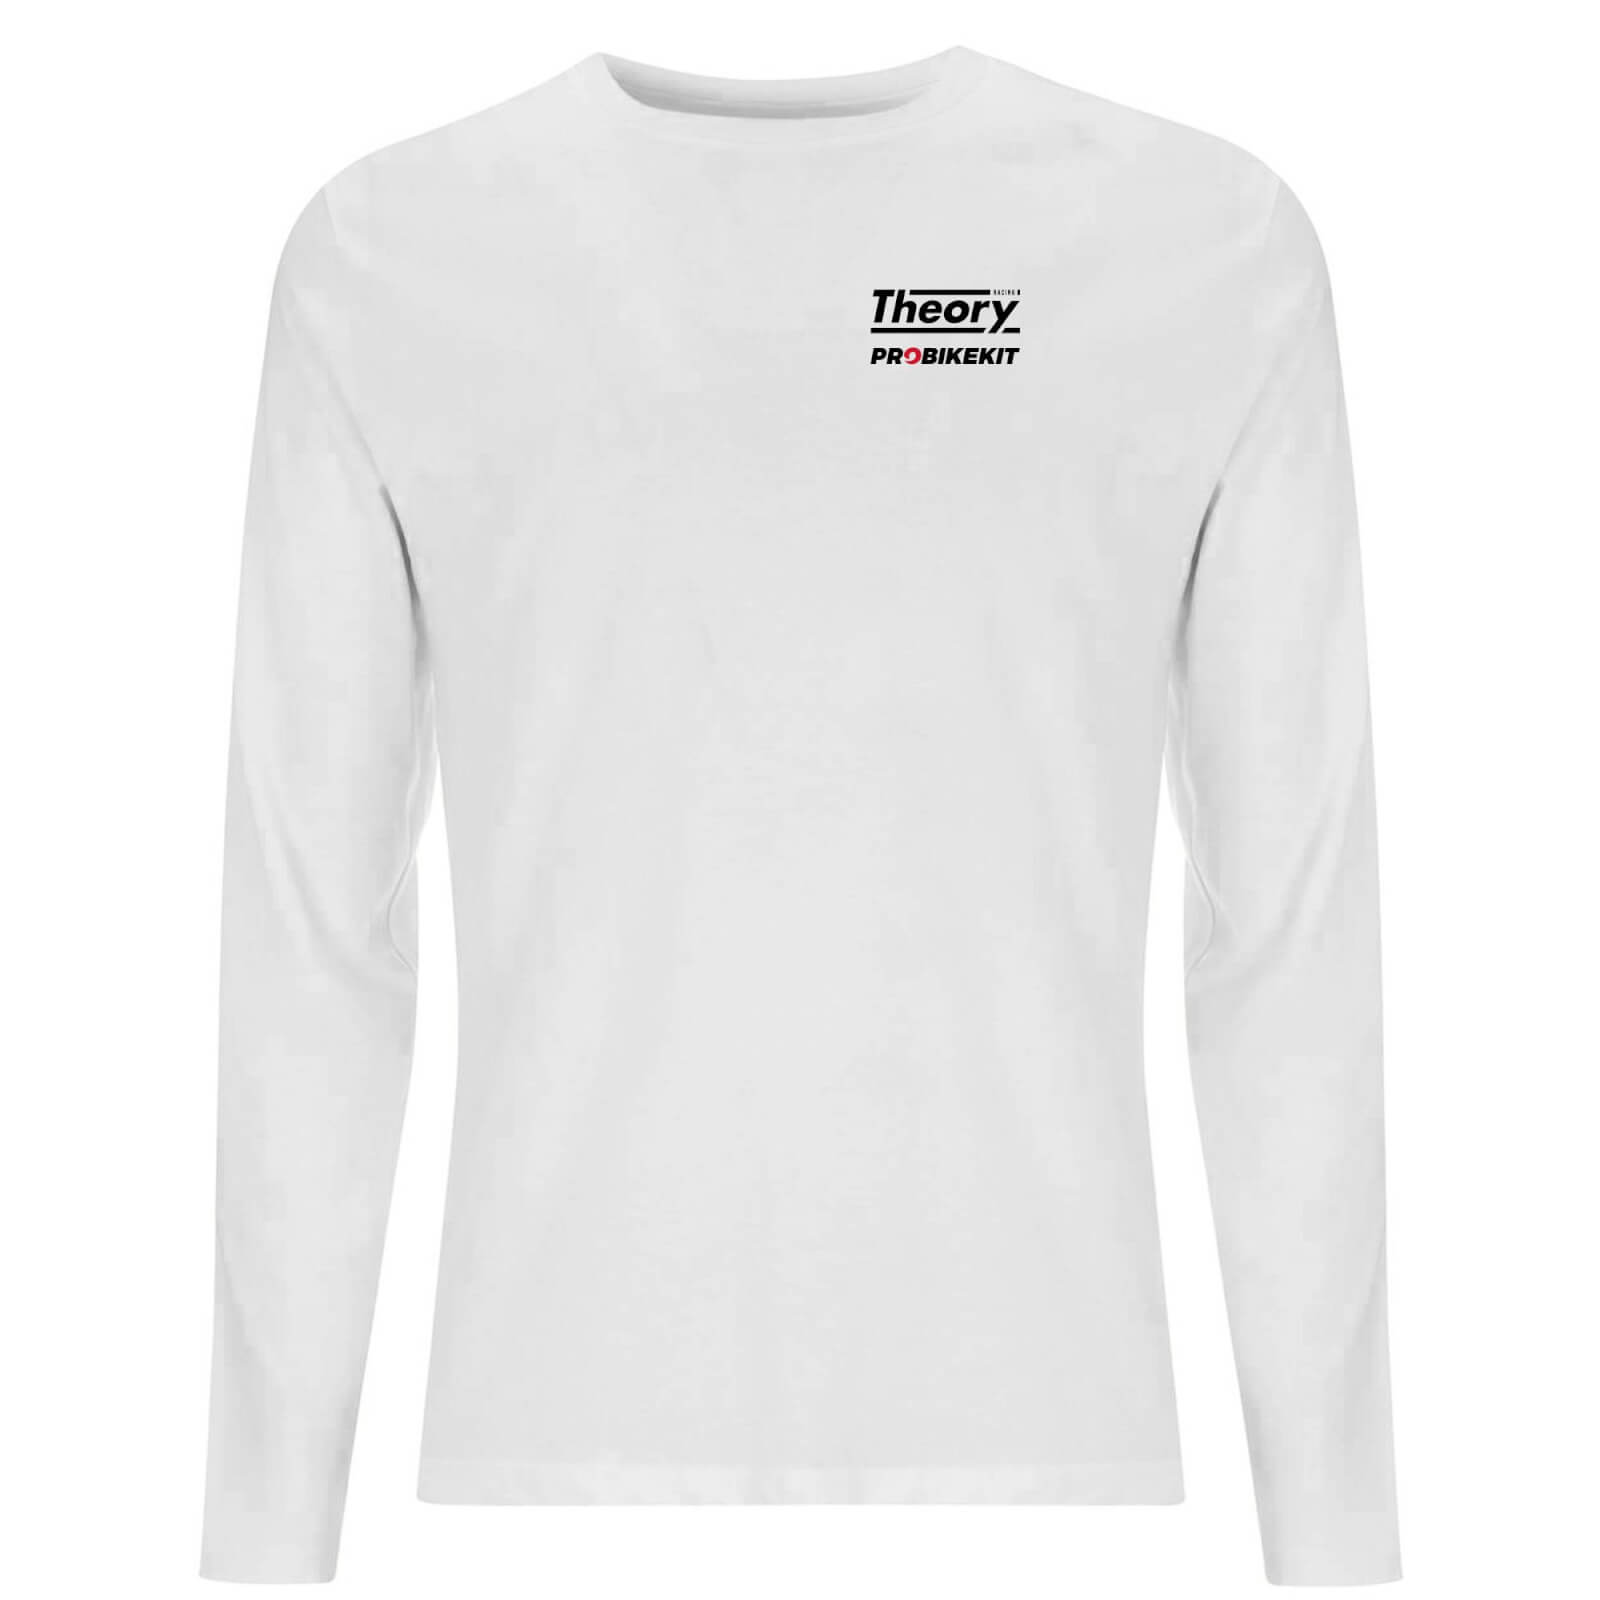 PBK Theory Logo Pocket Print Men's Long Sleeve T-Shirt - White - M - White